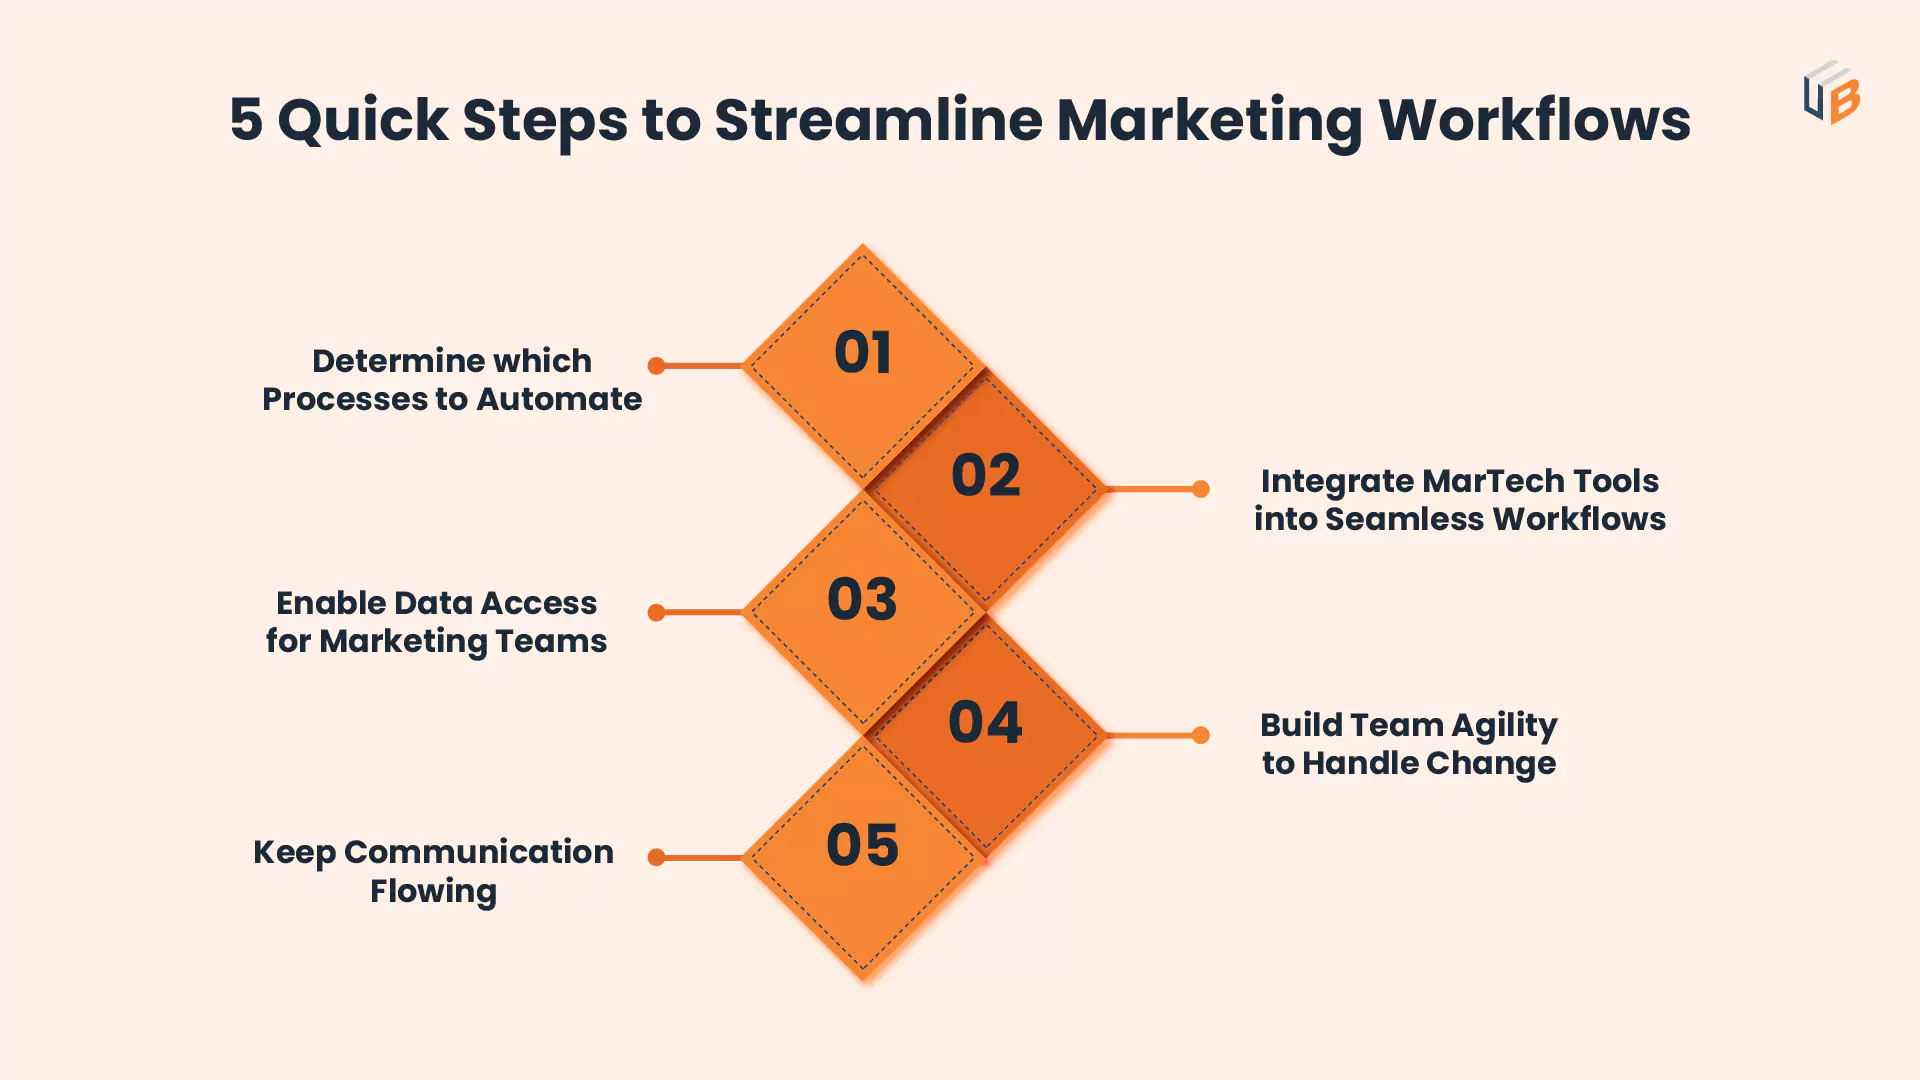 Crucial Tasks in Marketing Workflow